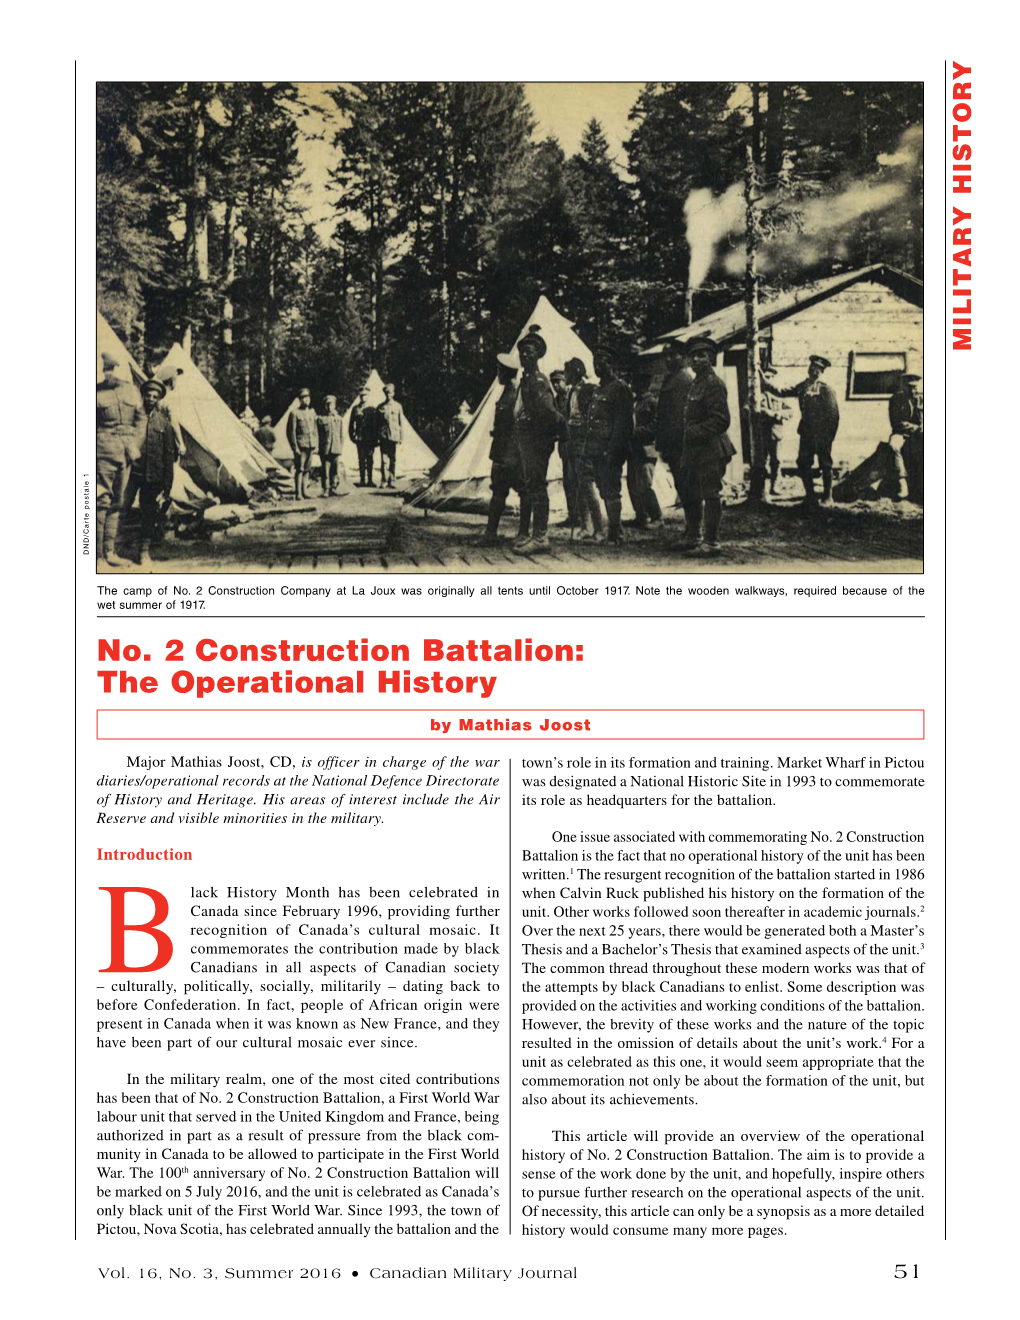 No. 2 Construction Battalion: the Operational History